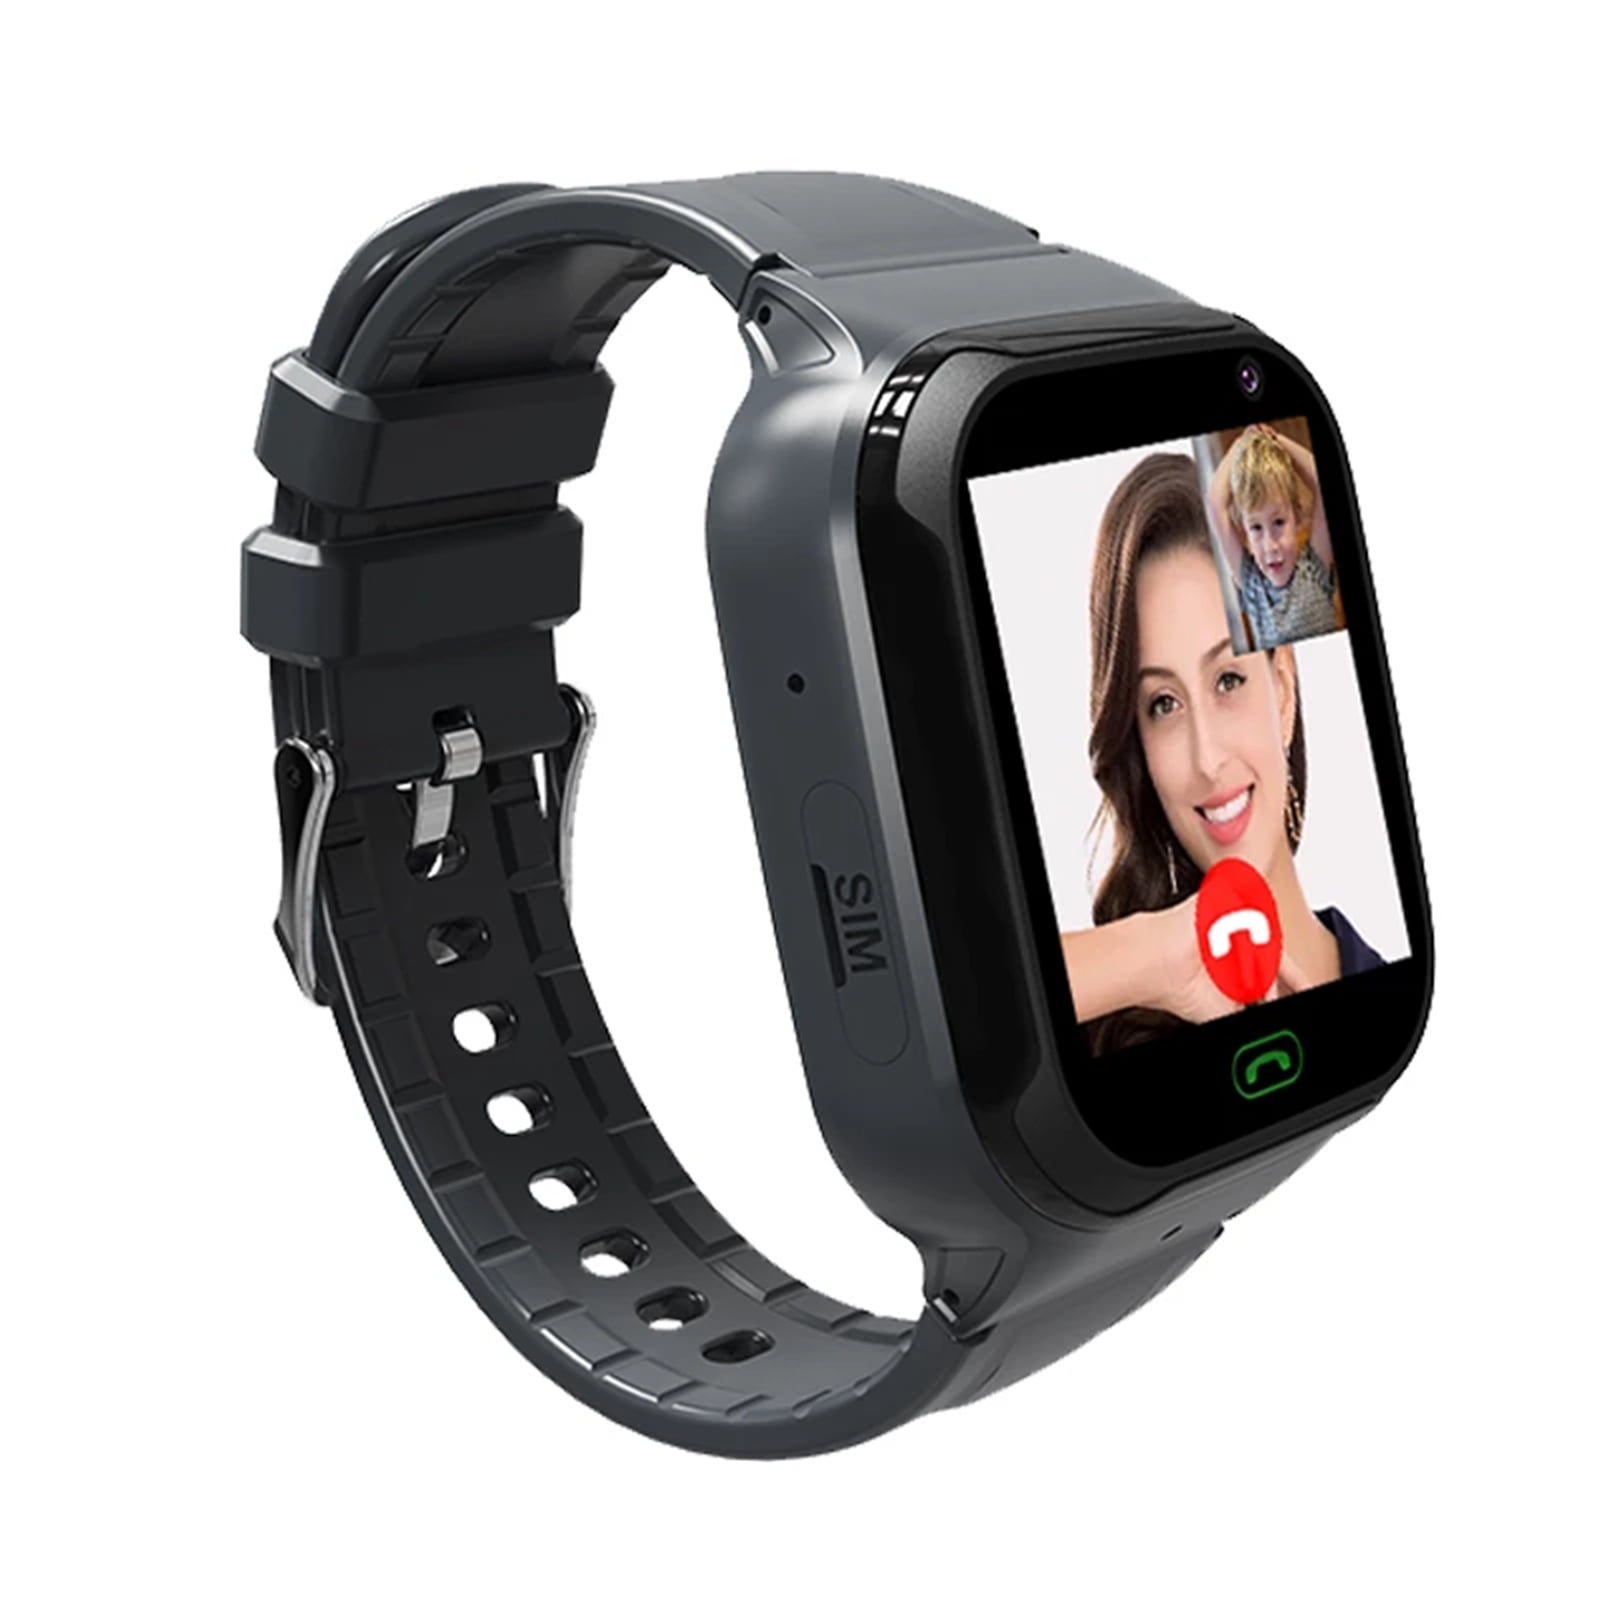 Smart Watch 4G LT36 Pedometer Positioning IP67 Waterproof Watch For Children Safe SmartWrist band Android IOS - Walmart.com